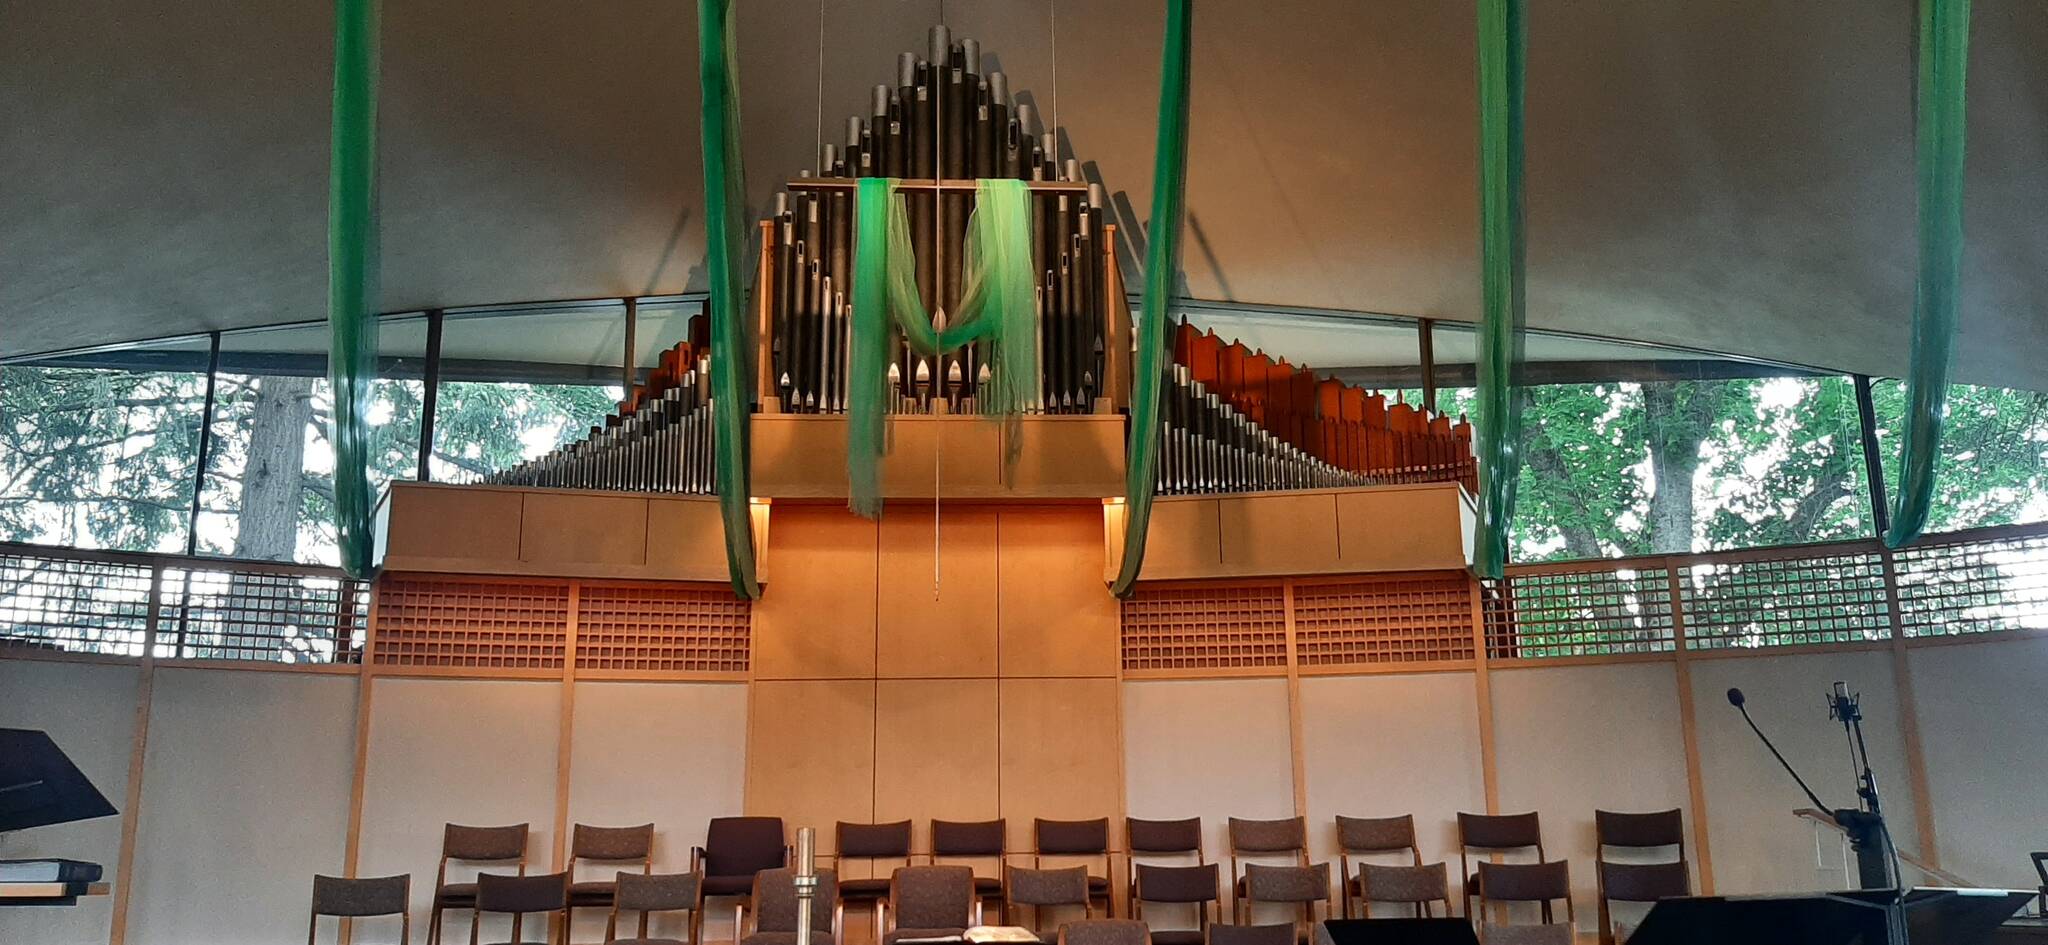 The organ at the front of Mercer Island Presbyterian Church. (Photos courtesy of Carl Dodrill)